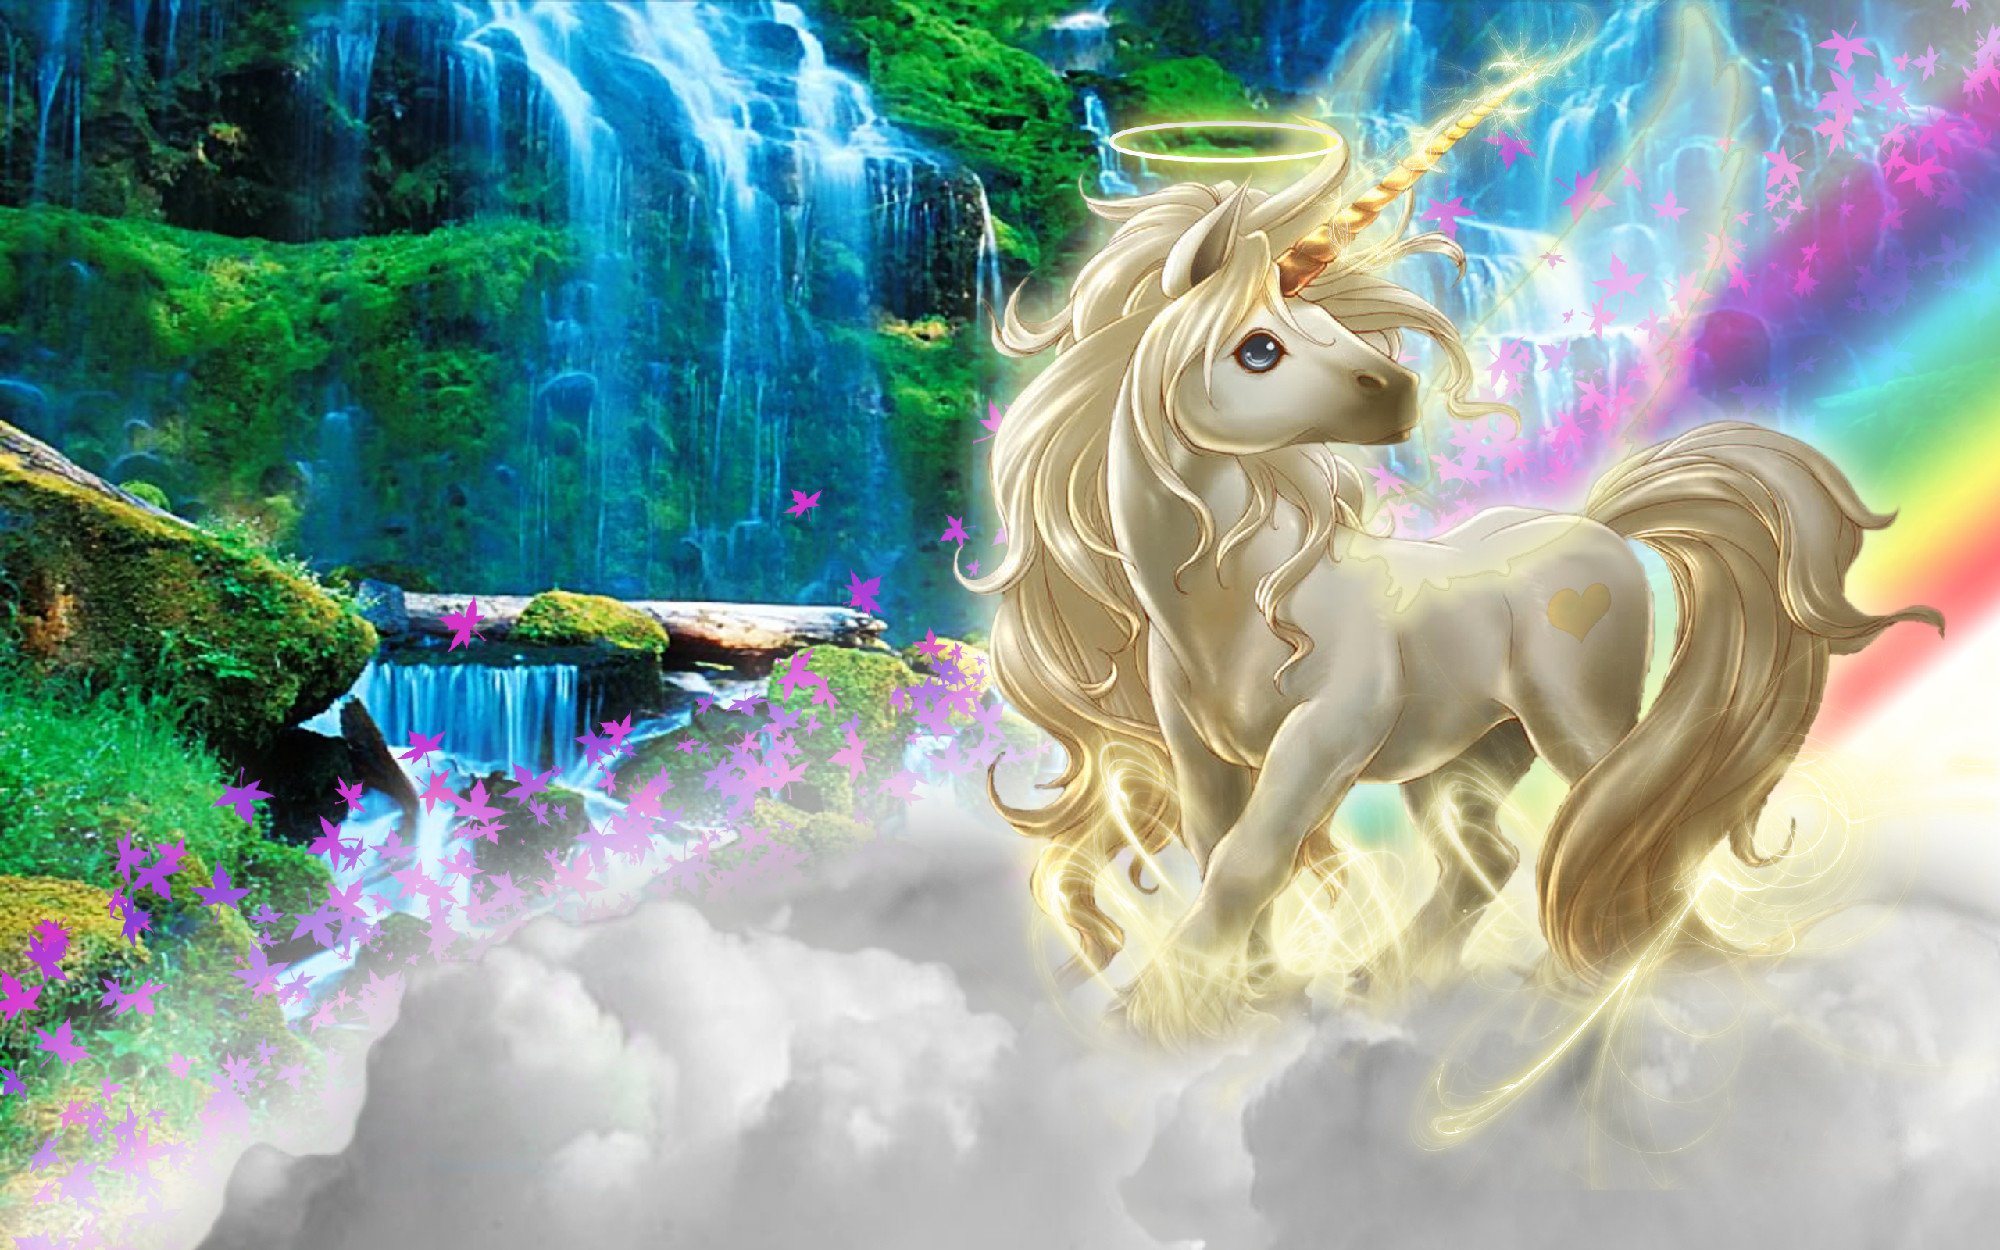 2000x1250 rainbow unicorn desktop background wallpapers hd free 581513